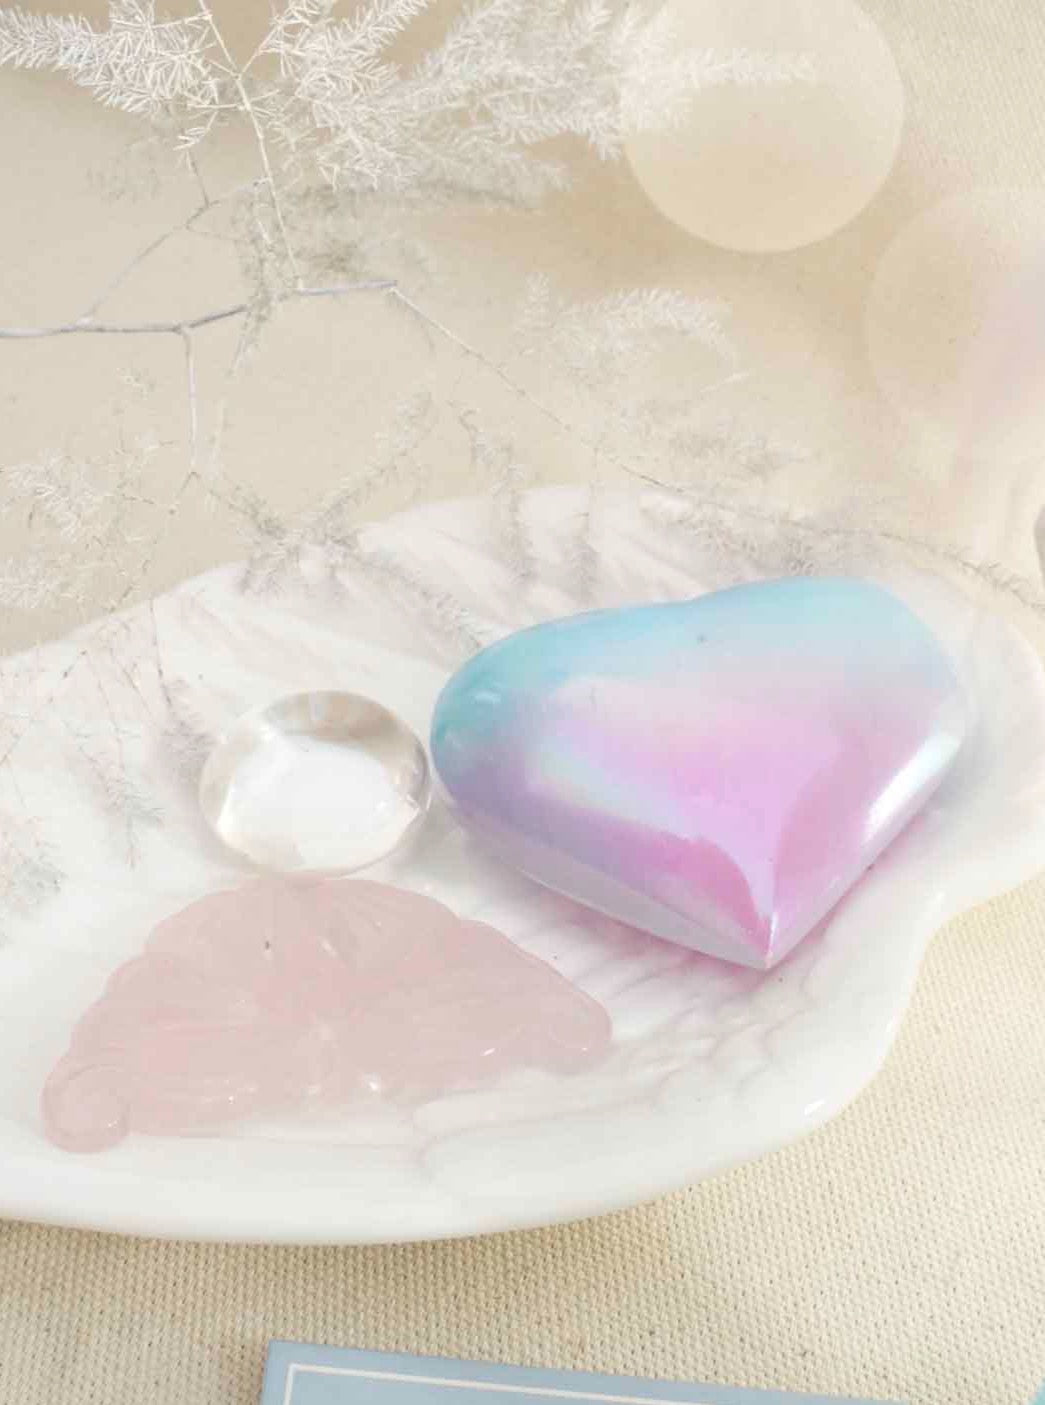 Aura Selenite Heart - Dream Den Crystals